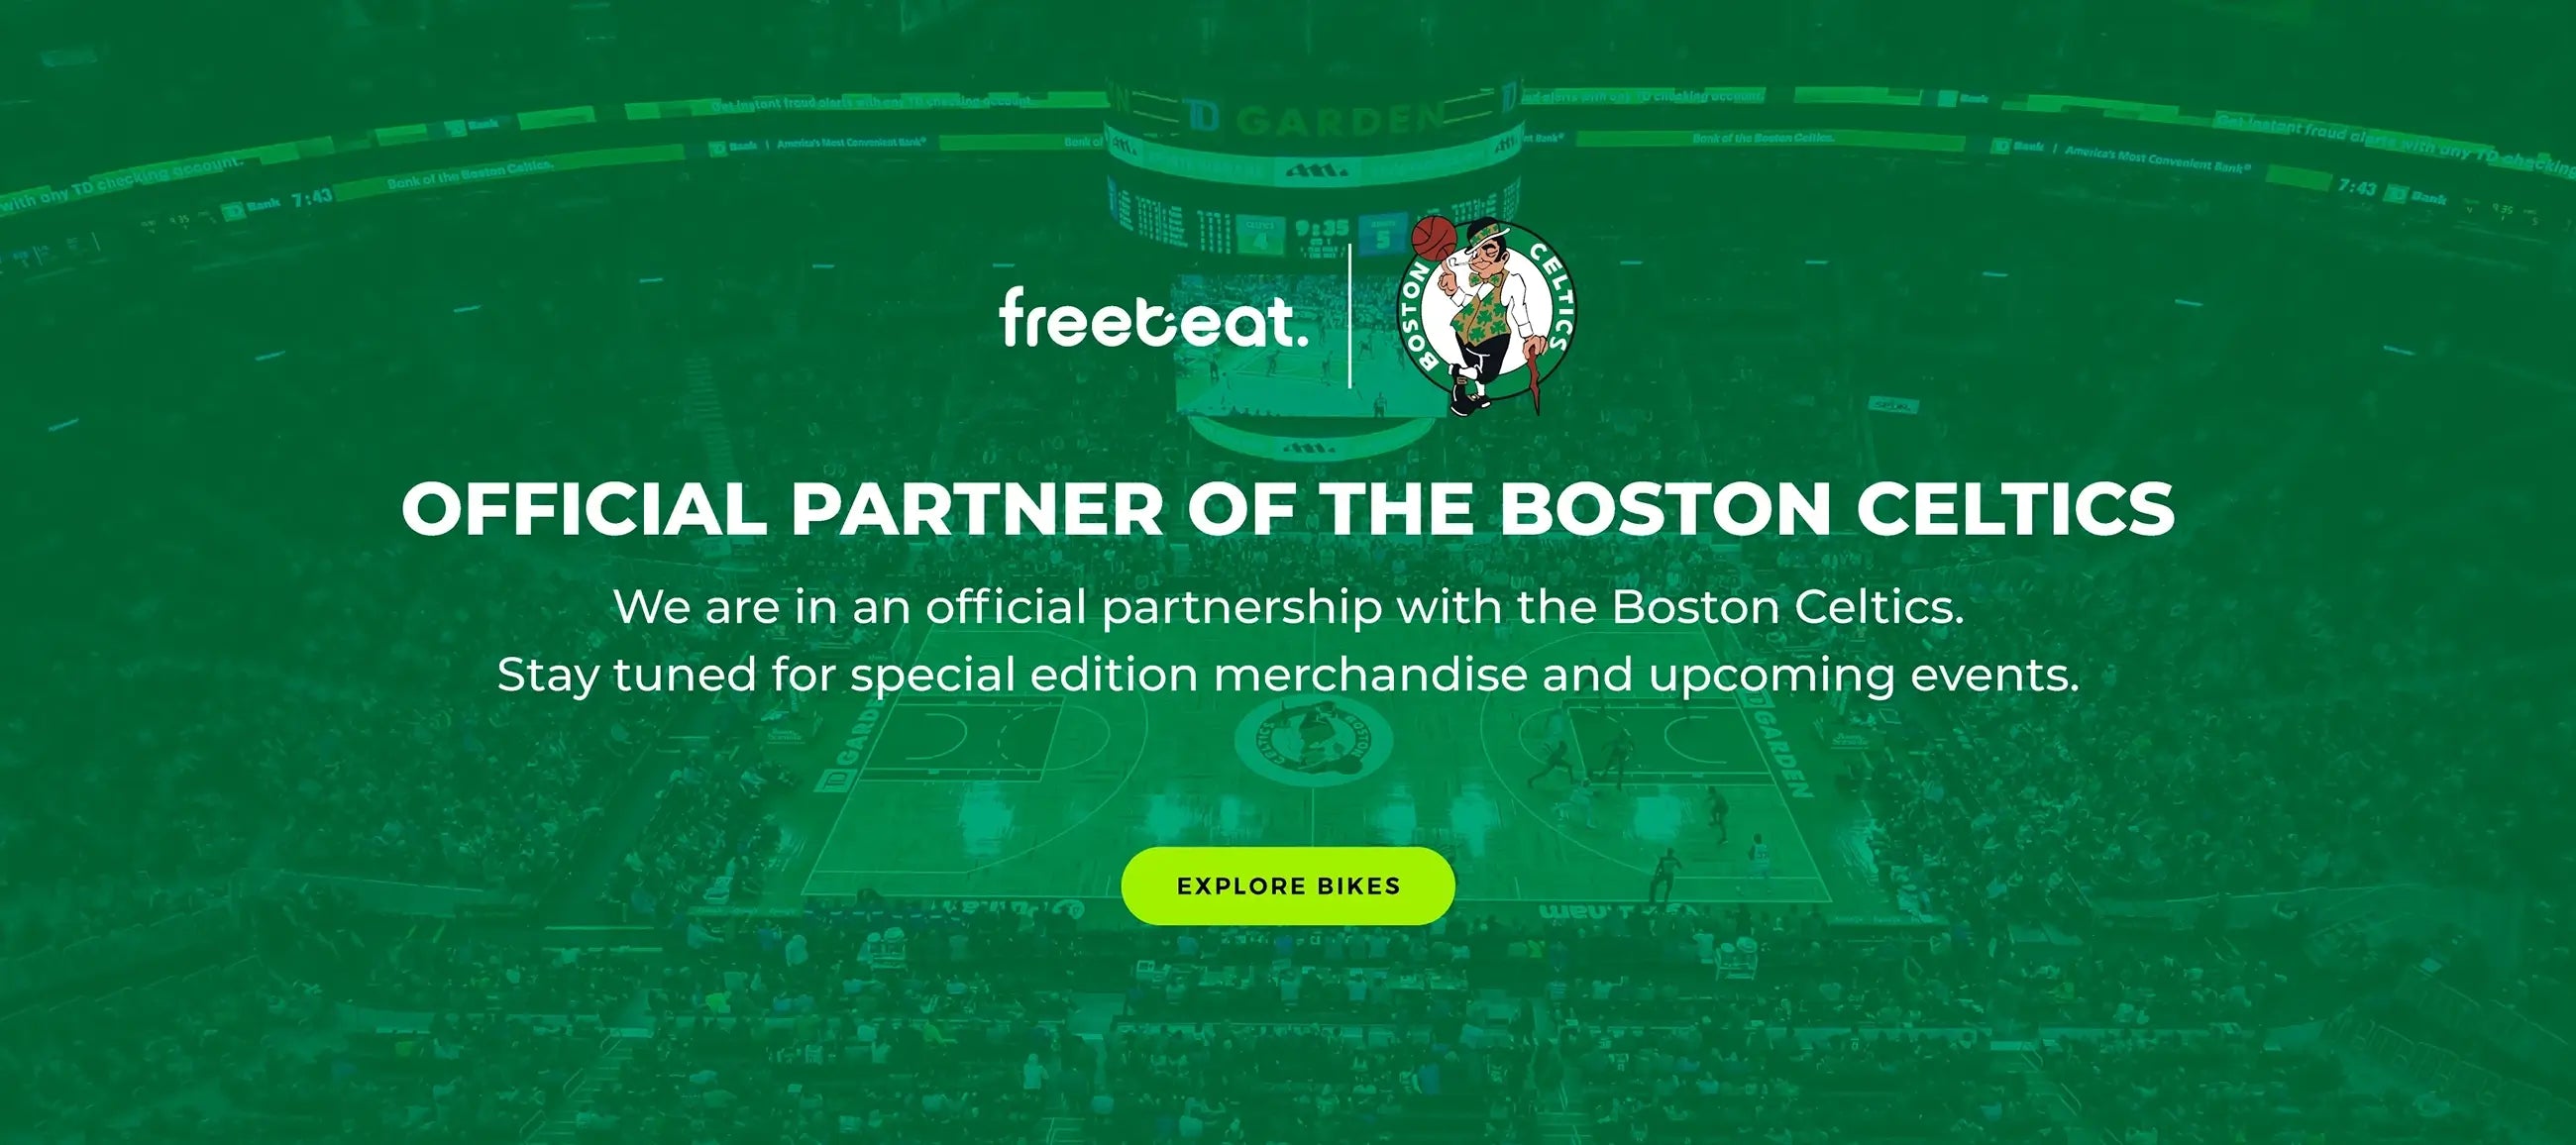 freebeat, the official partner of the Boston Celtics | NBA news